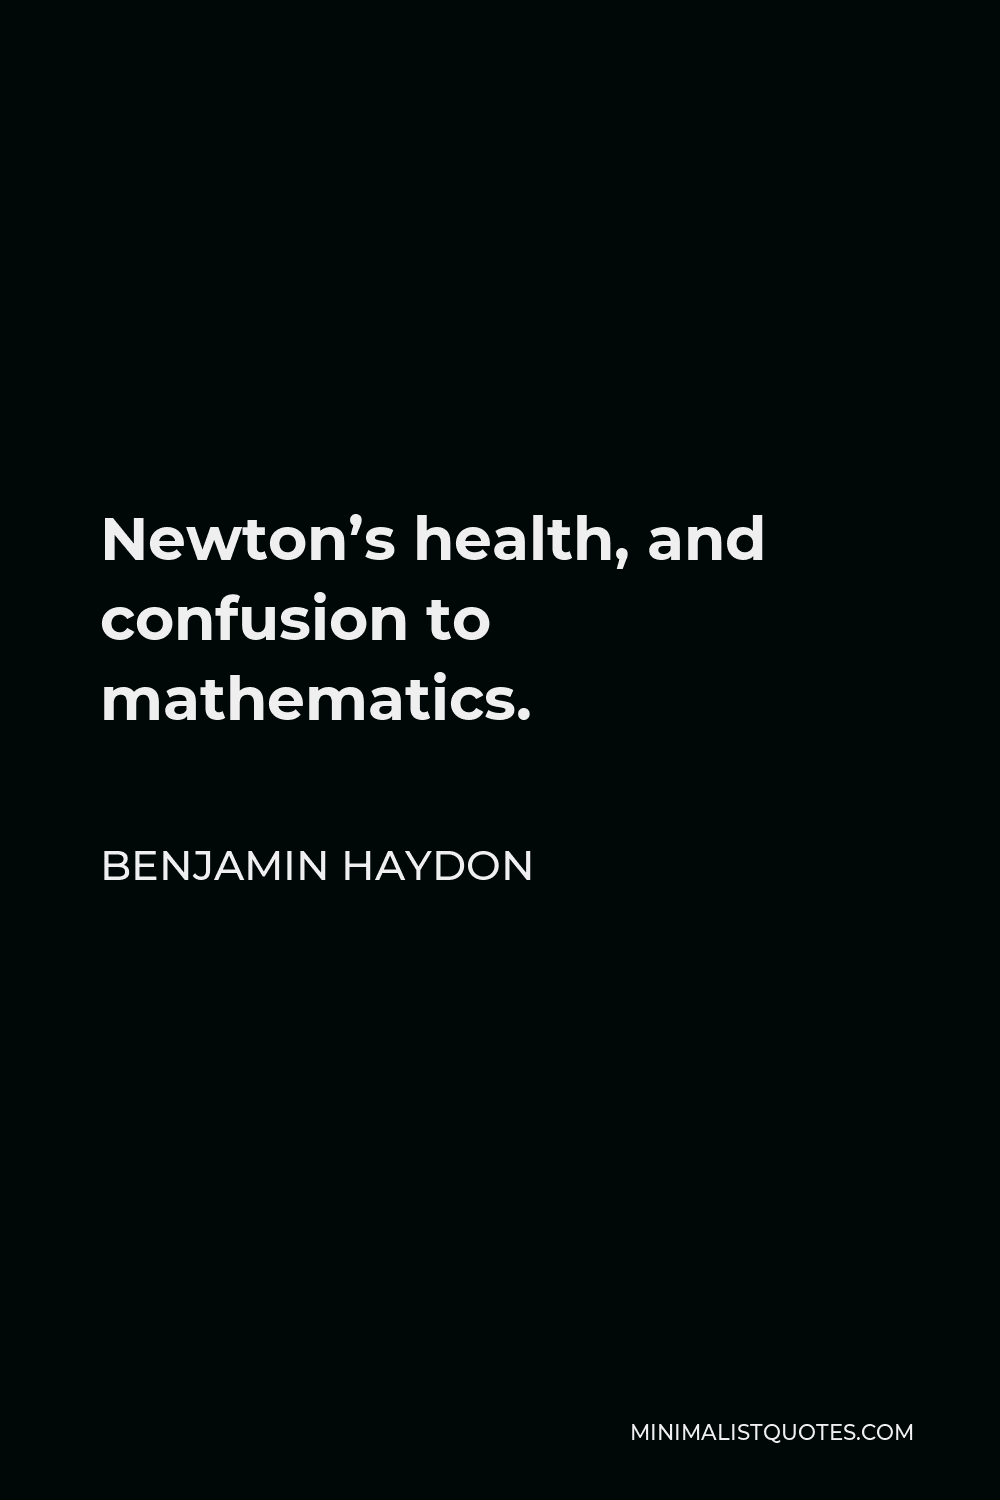 Benjamin Haydon Quote - Newton’s health, and confusion to mathematics.